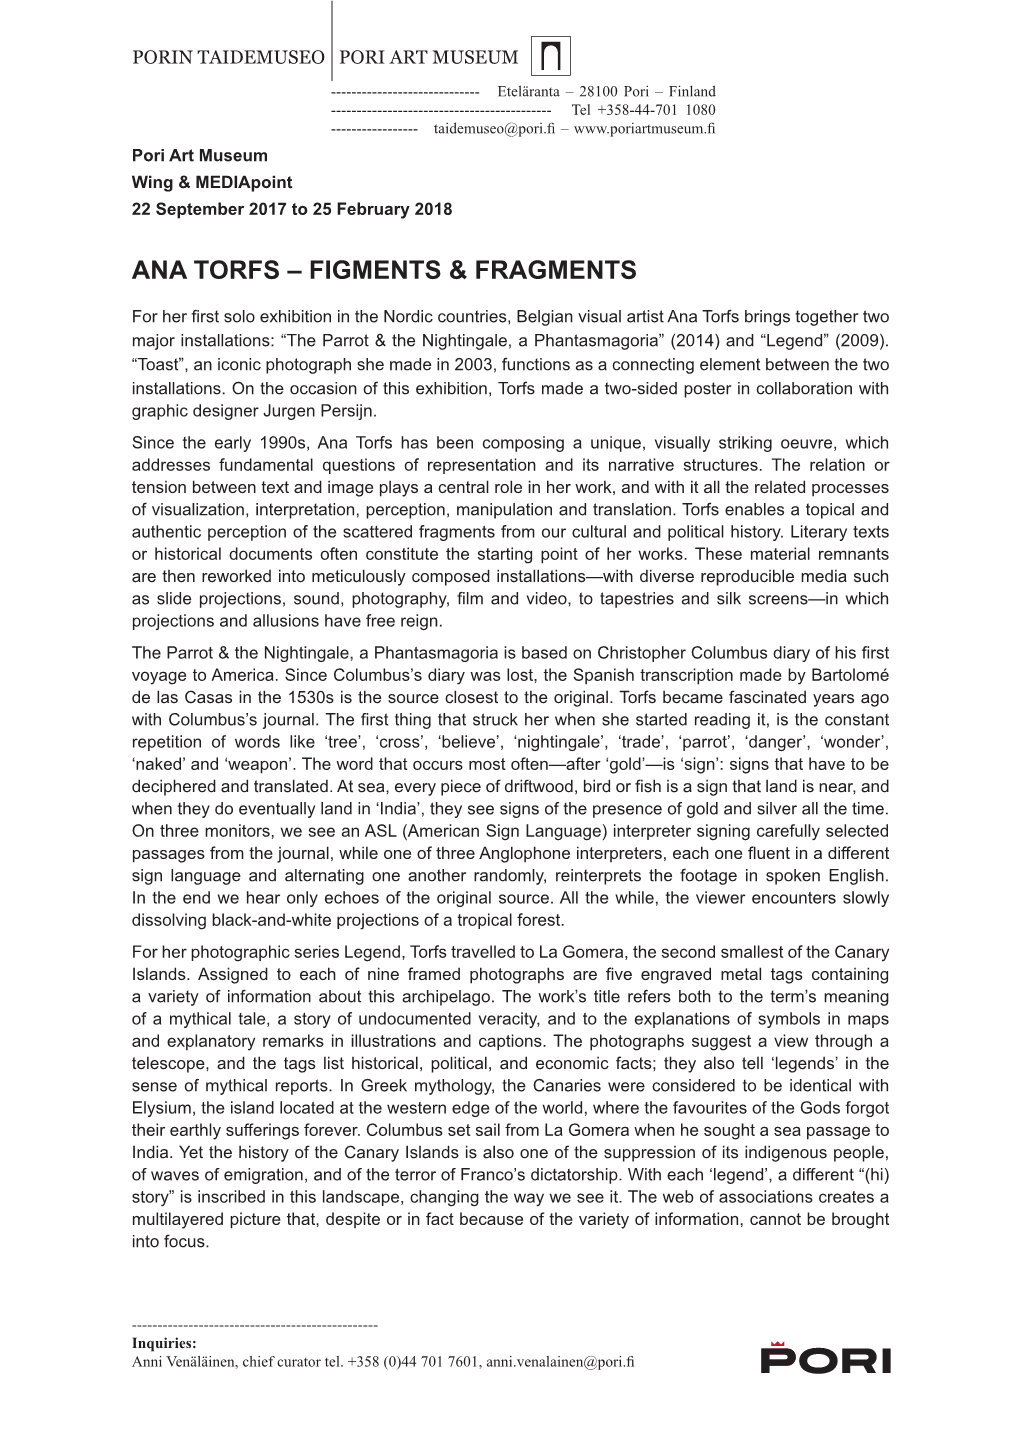 Ana Torfs – Figments & Fragments